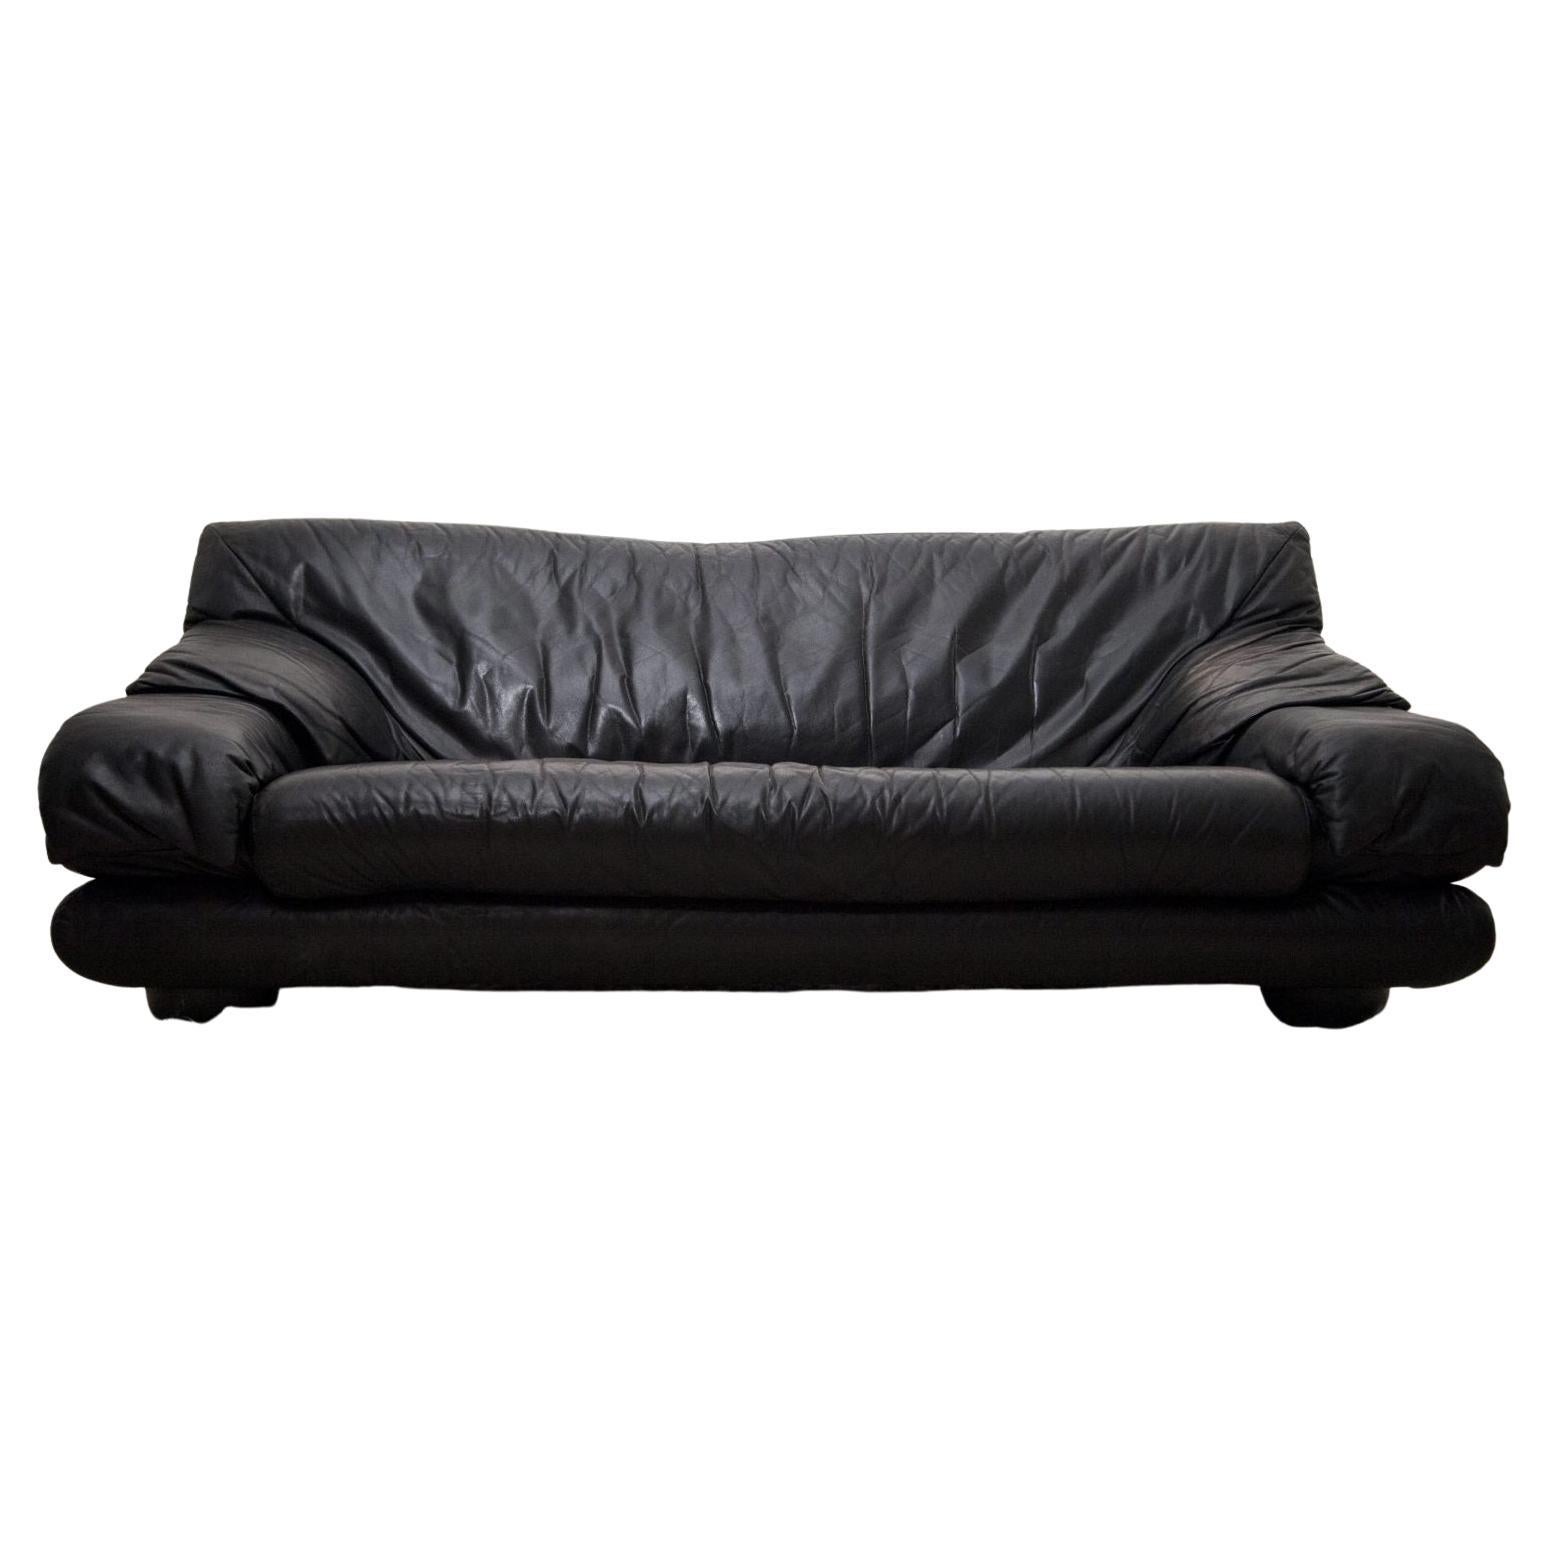 1970s Black Leather Sofa by Manufacturer Wiener Werkstätte For Sale